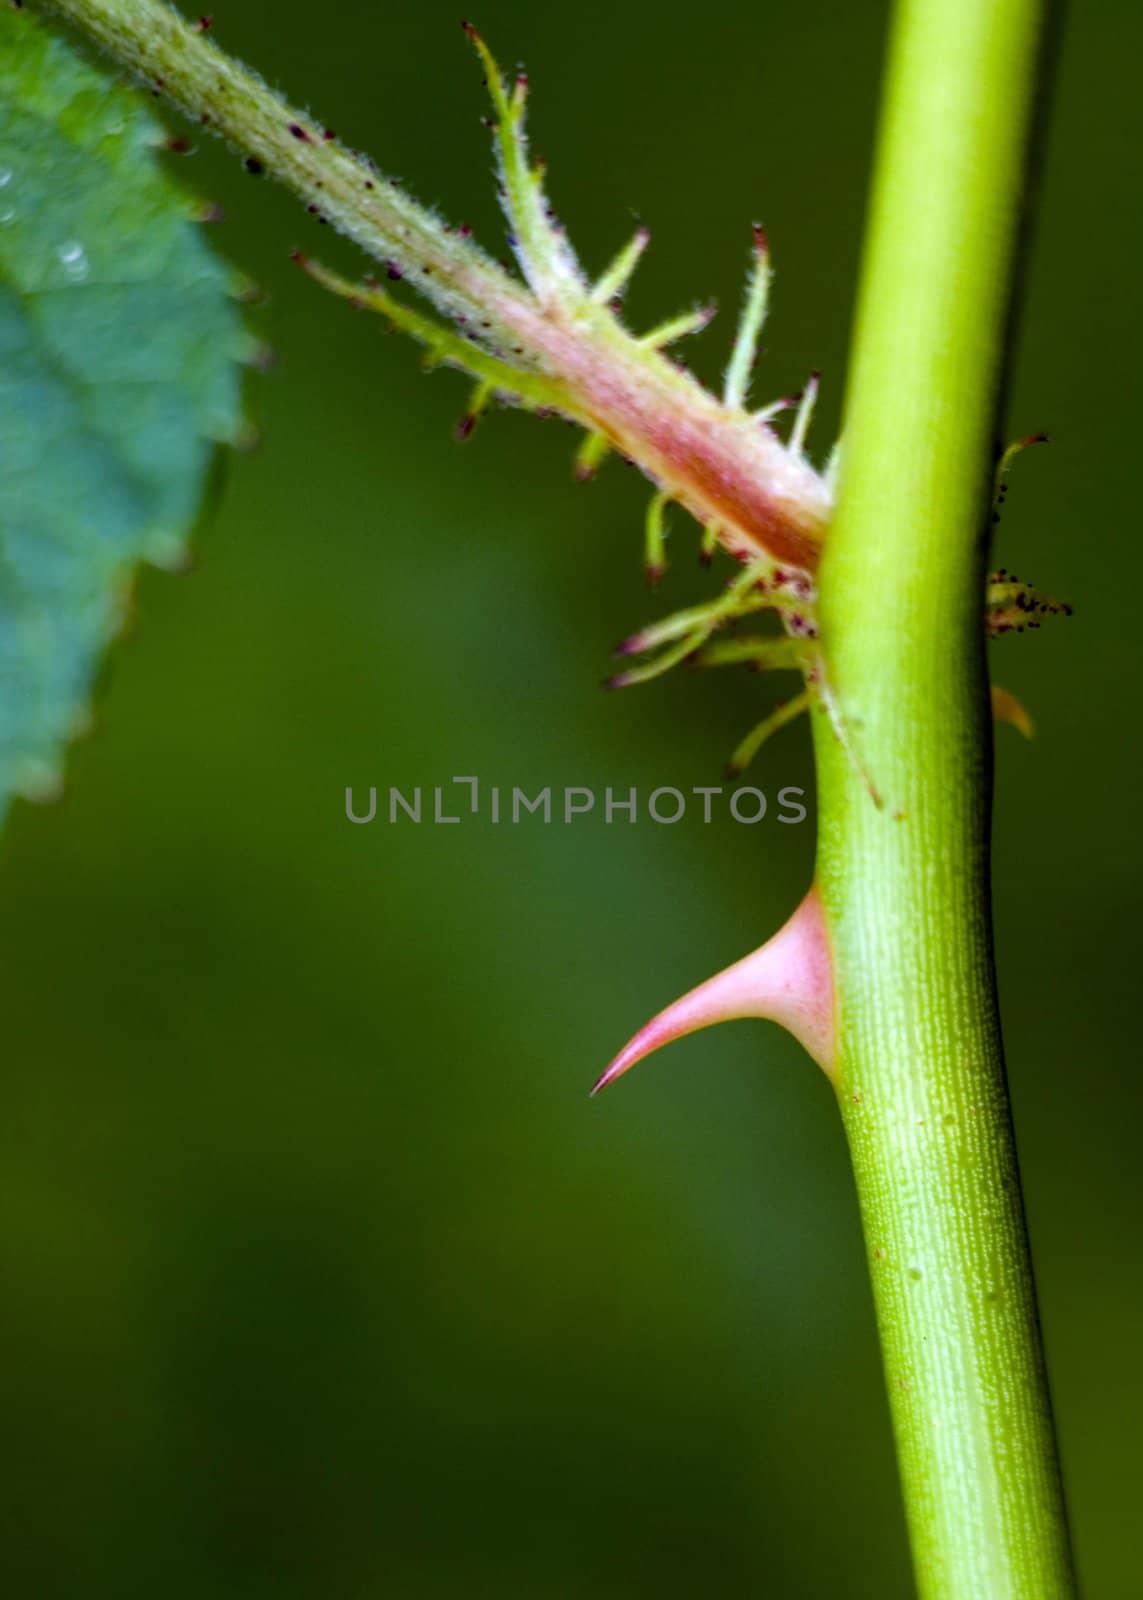 A raspberry stem showing a sharp thorn.